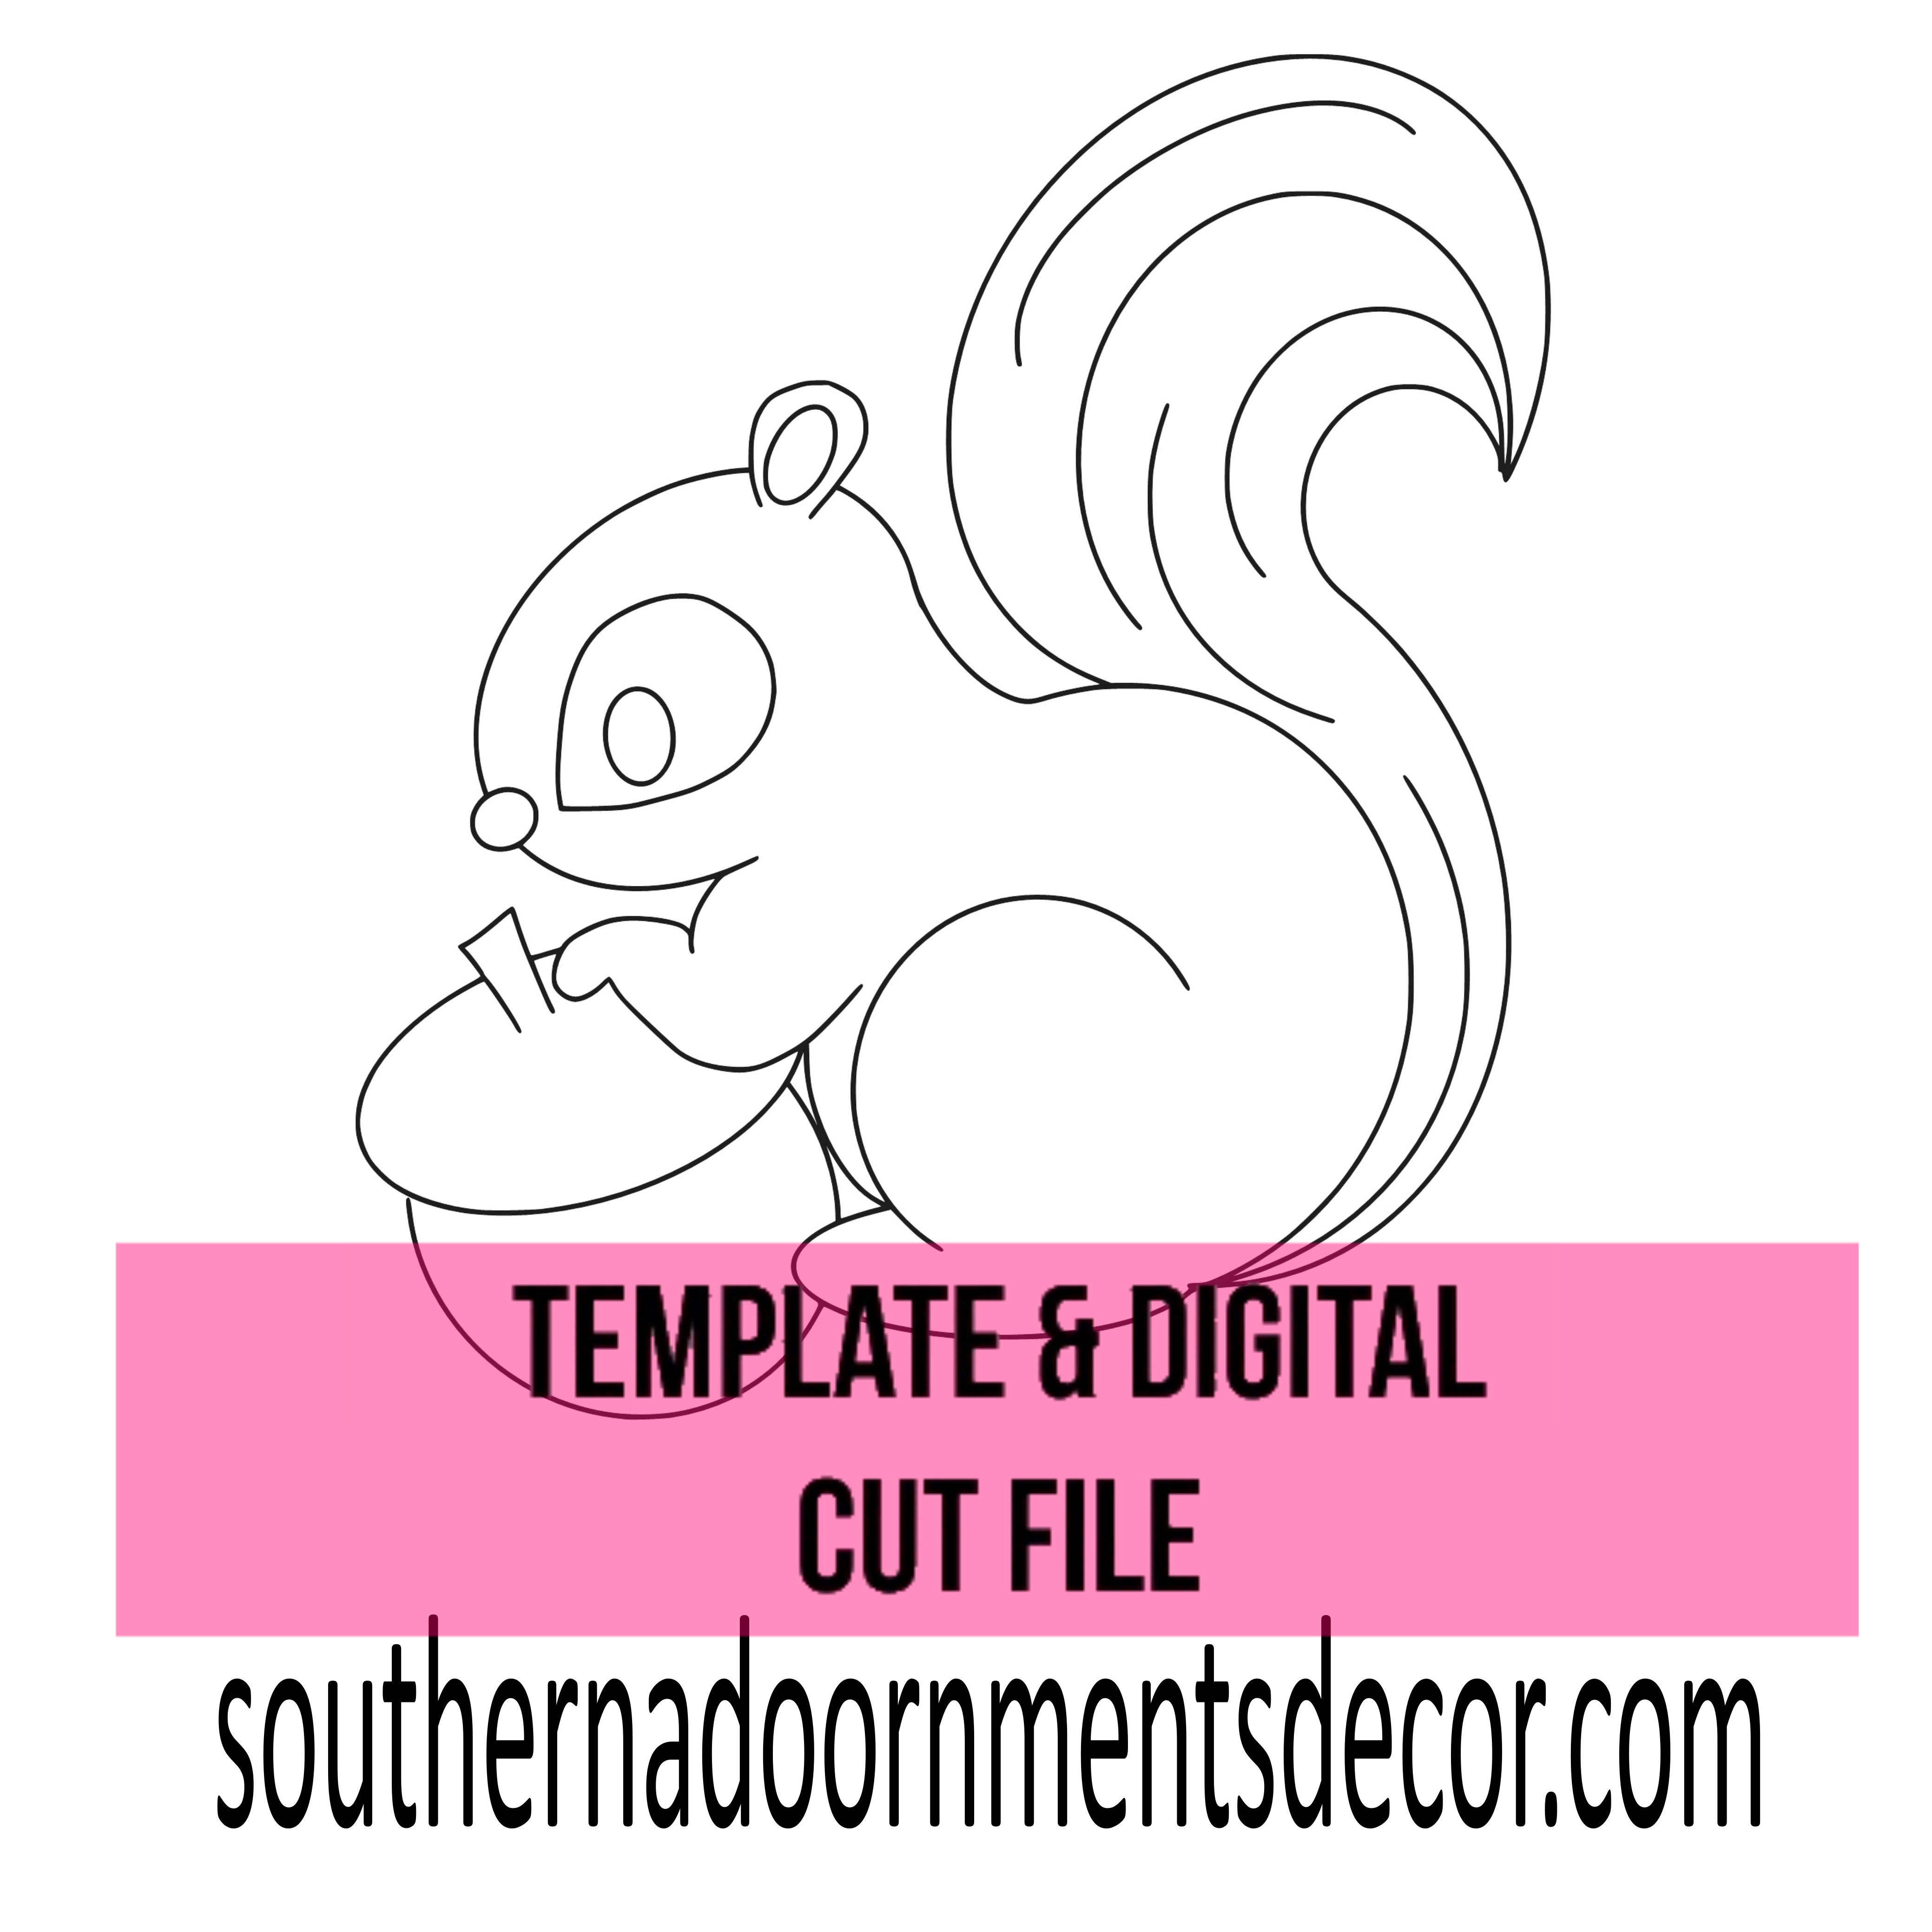 Squirrel with Acorn Template & Digital Cut File